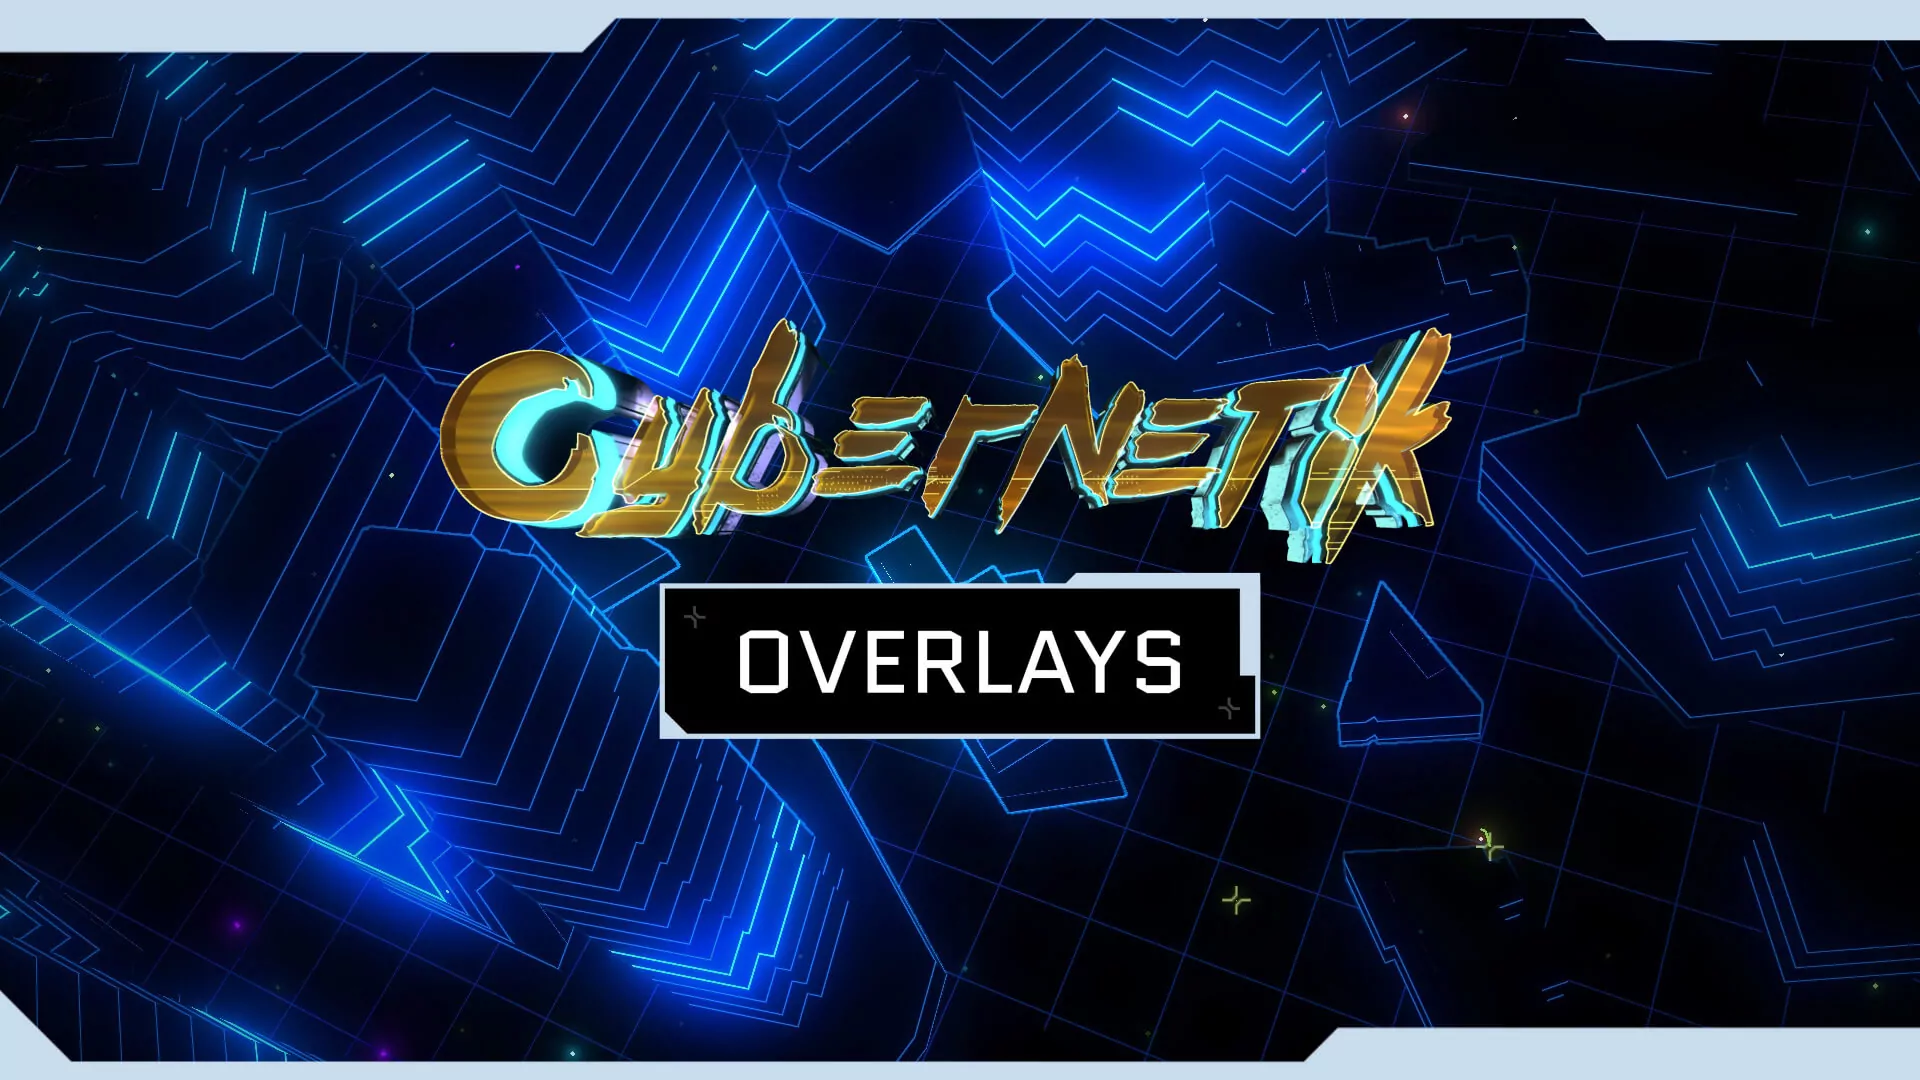 Cybernetik Overlays